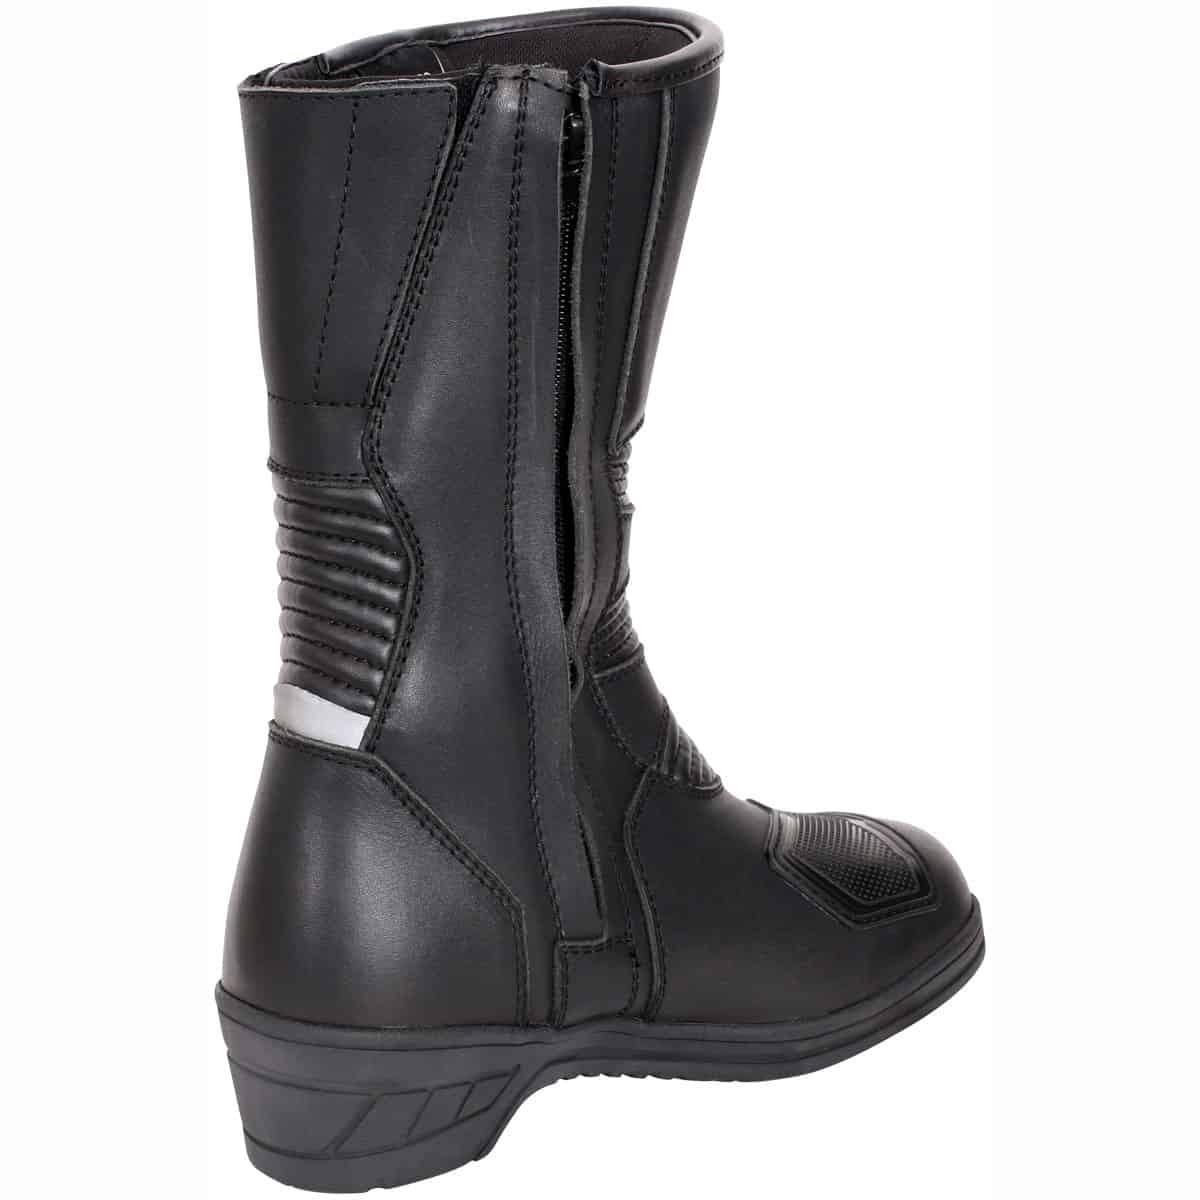 Duchinni Nebula Touring Boots Ladies WP - Black 2